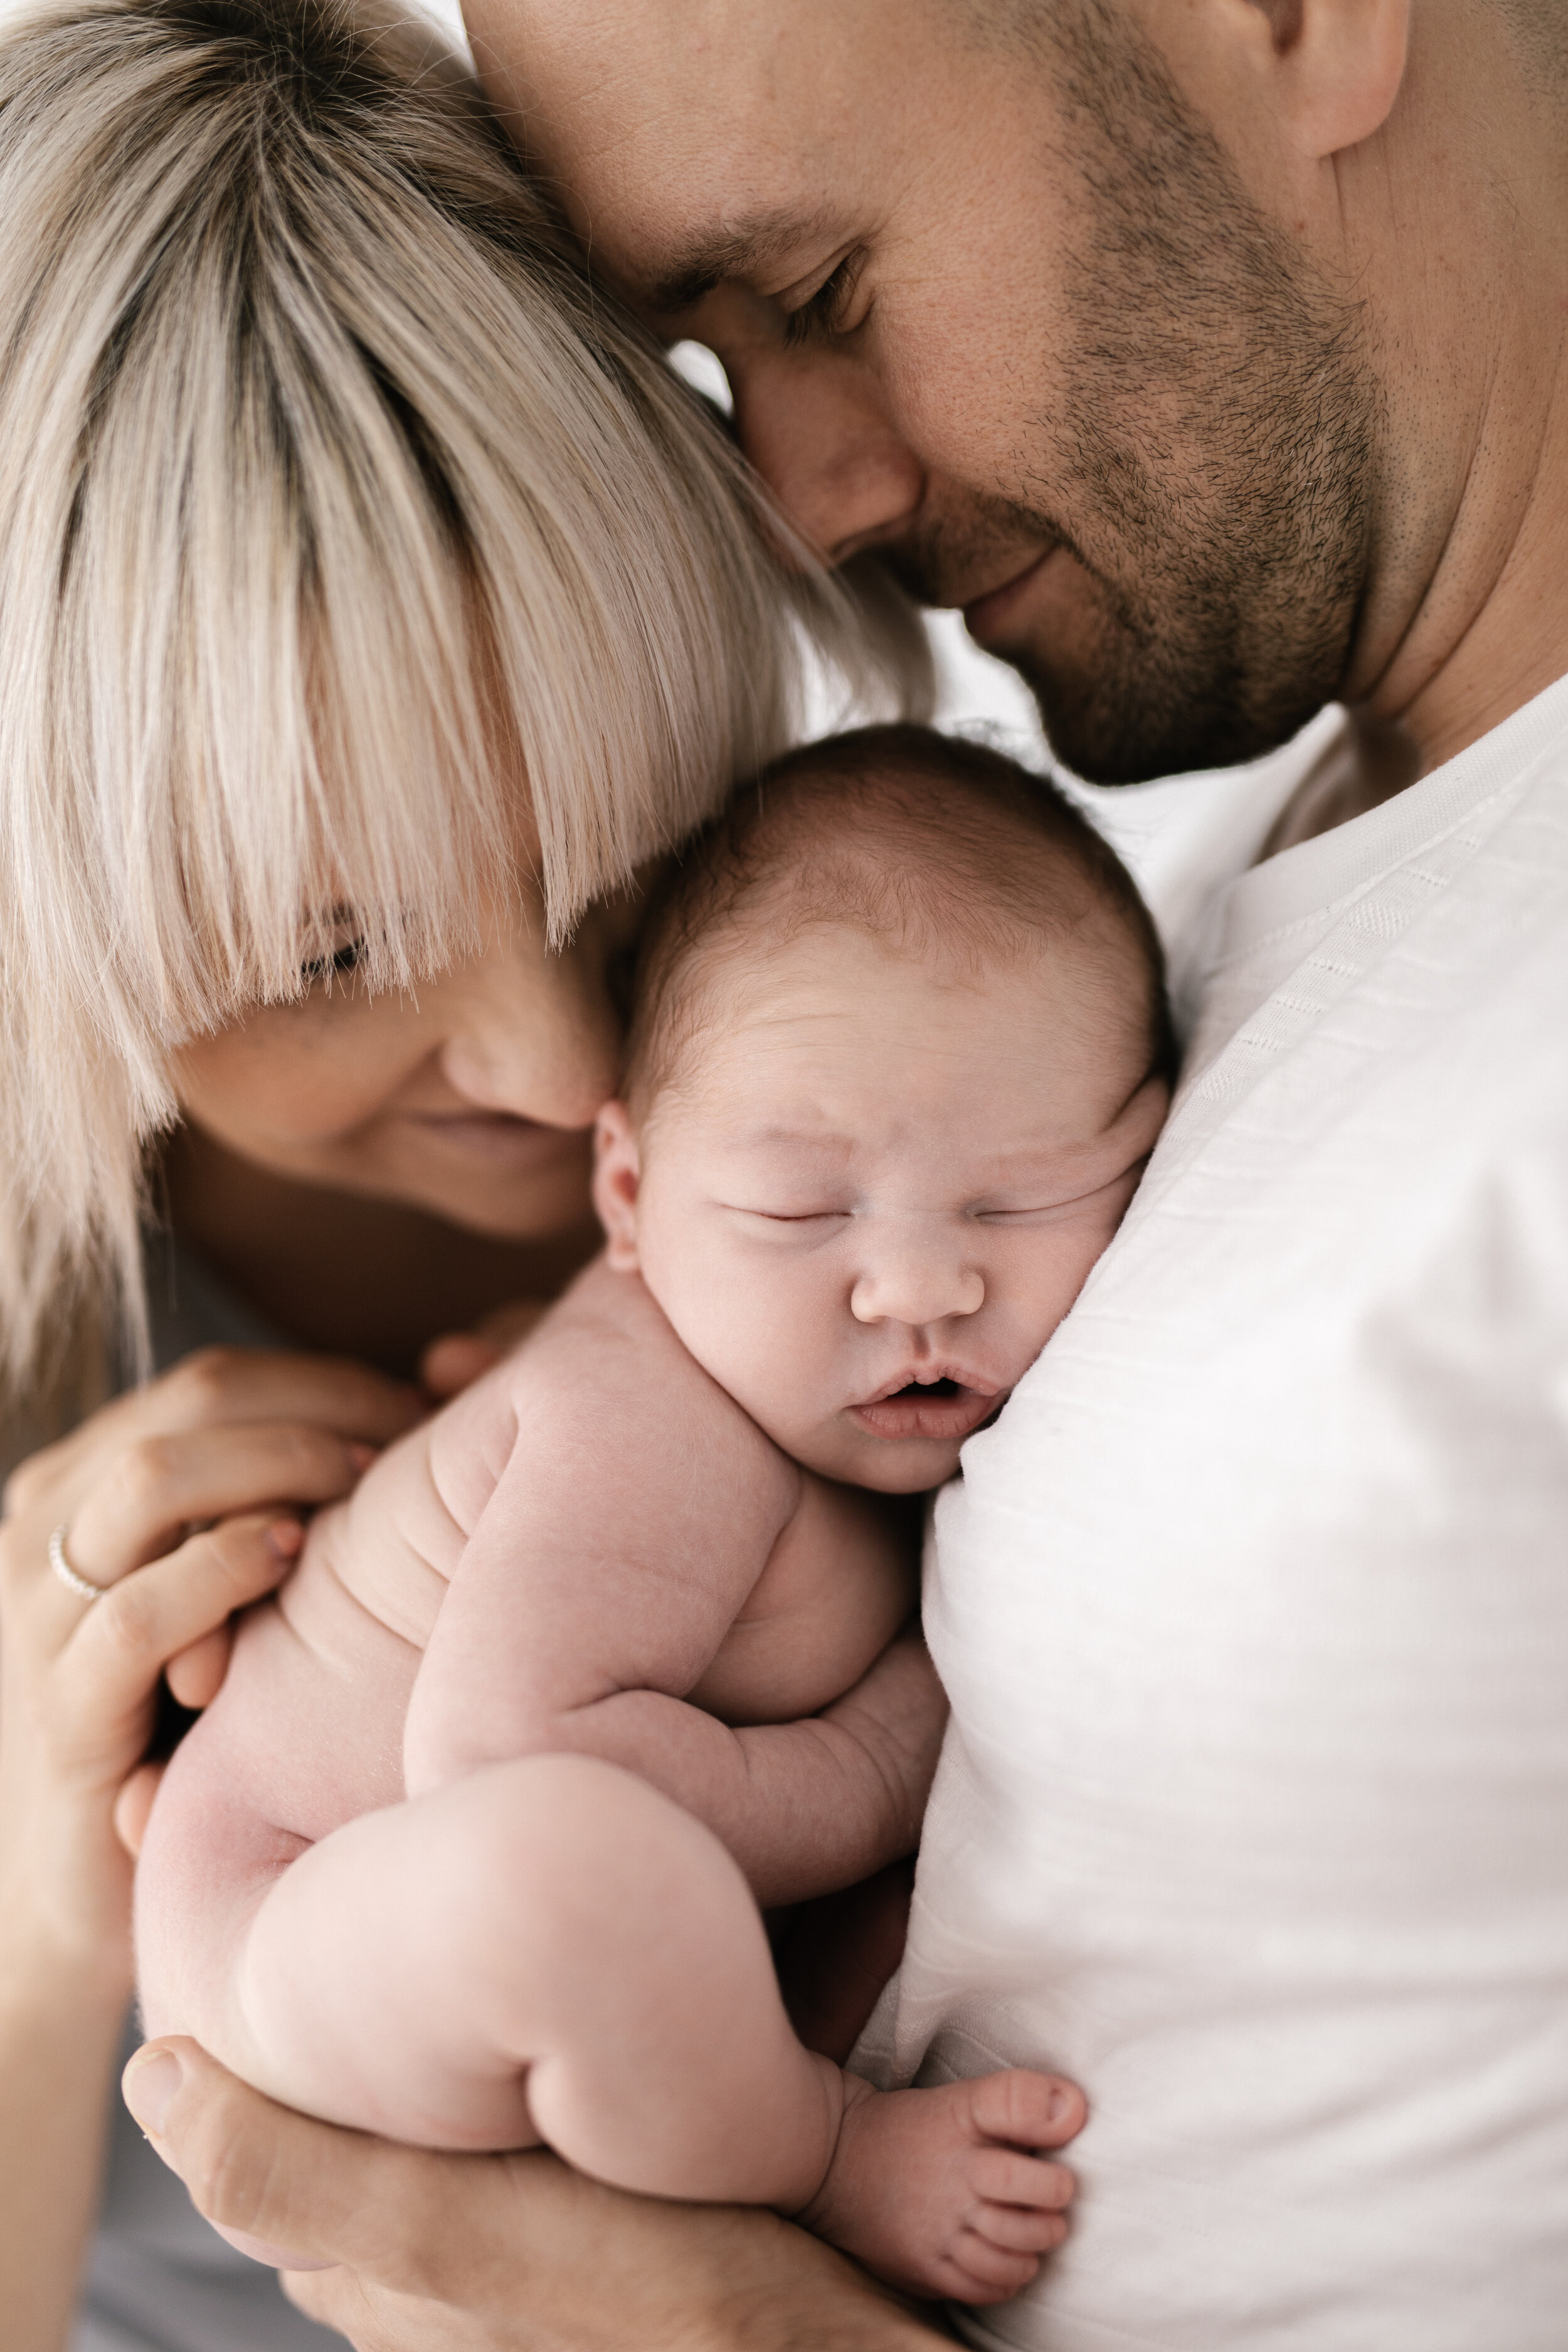 Newborn baby snuggled into mum and dad